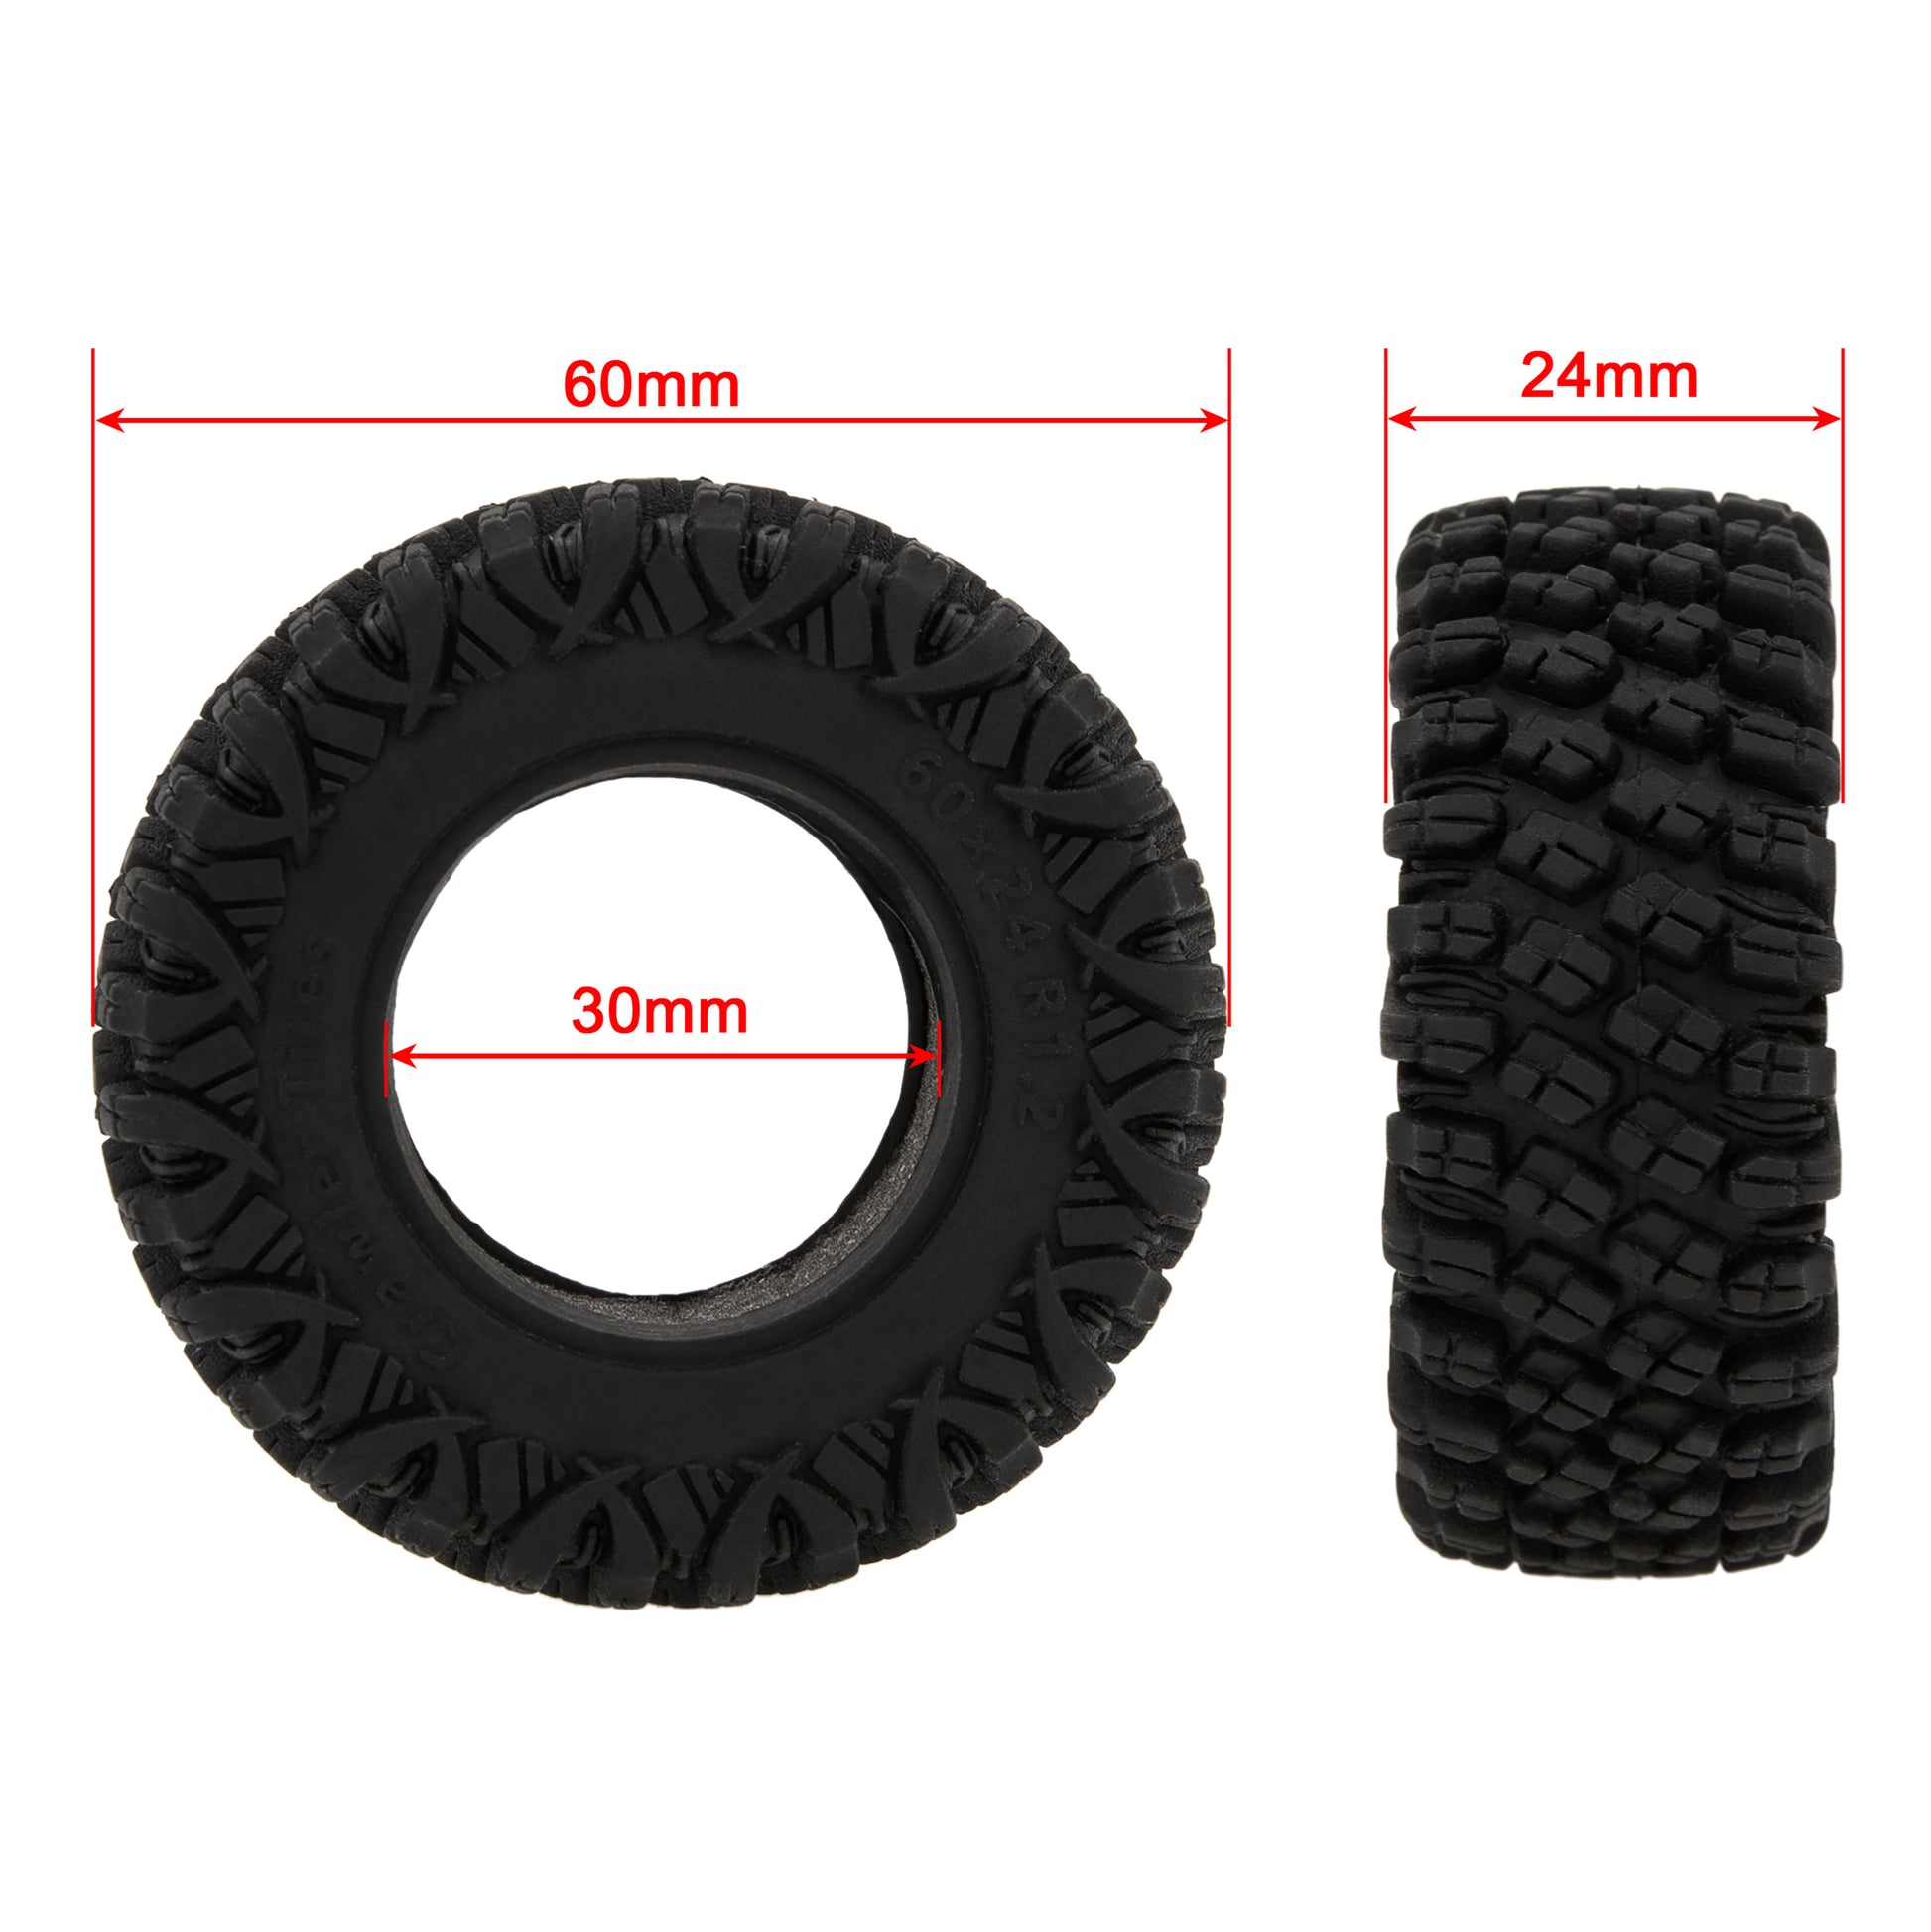 C type 1.2-inch Beadlock Tires size for SCX24, TRX4M, FCX24